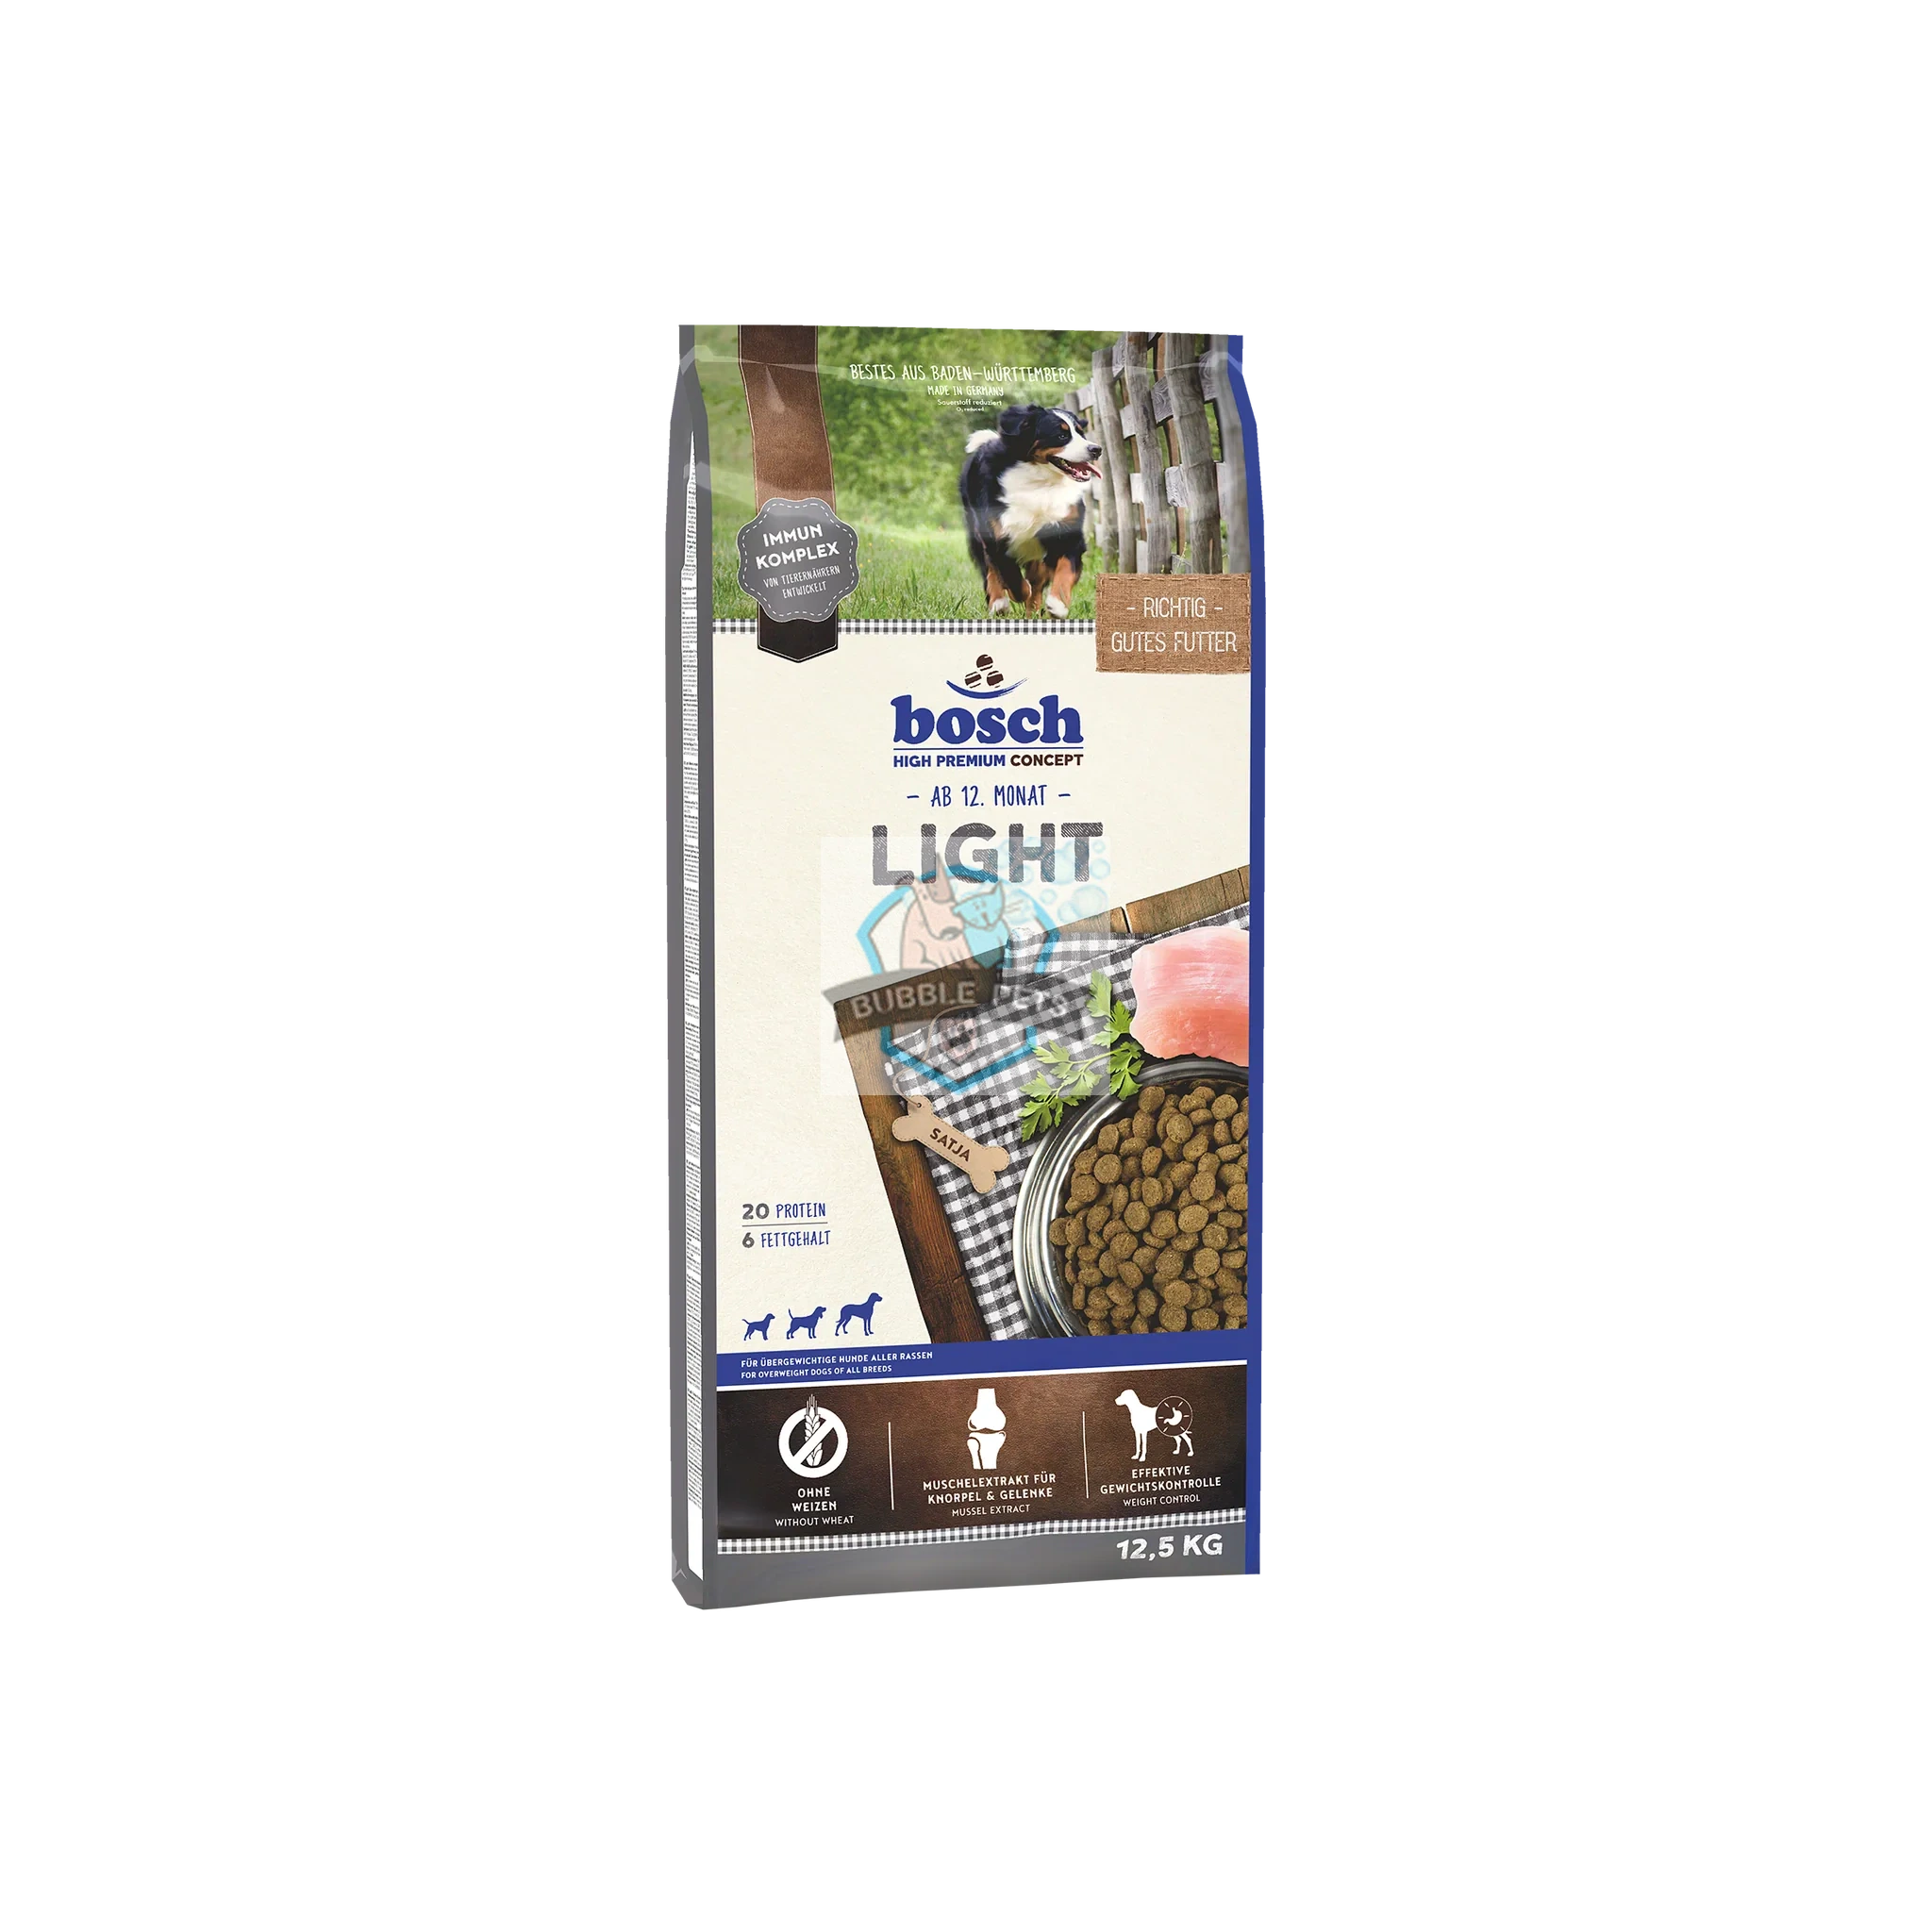 Bosch High Premium Light Dog Food